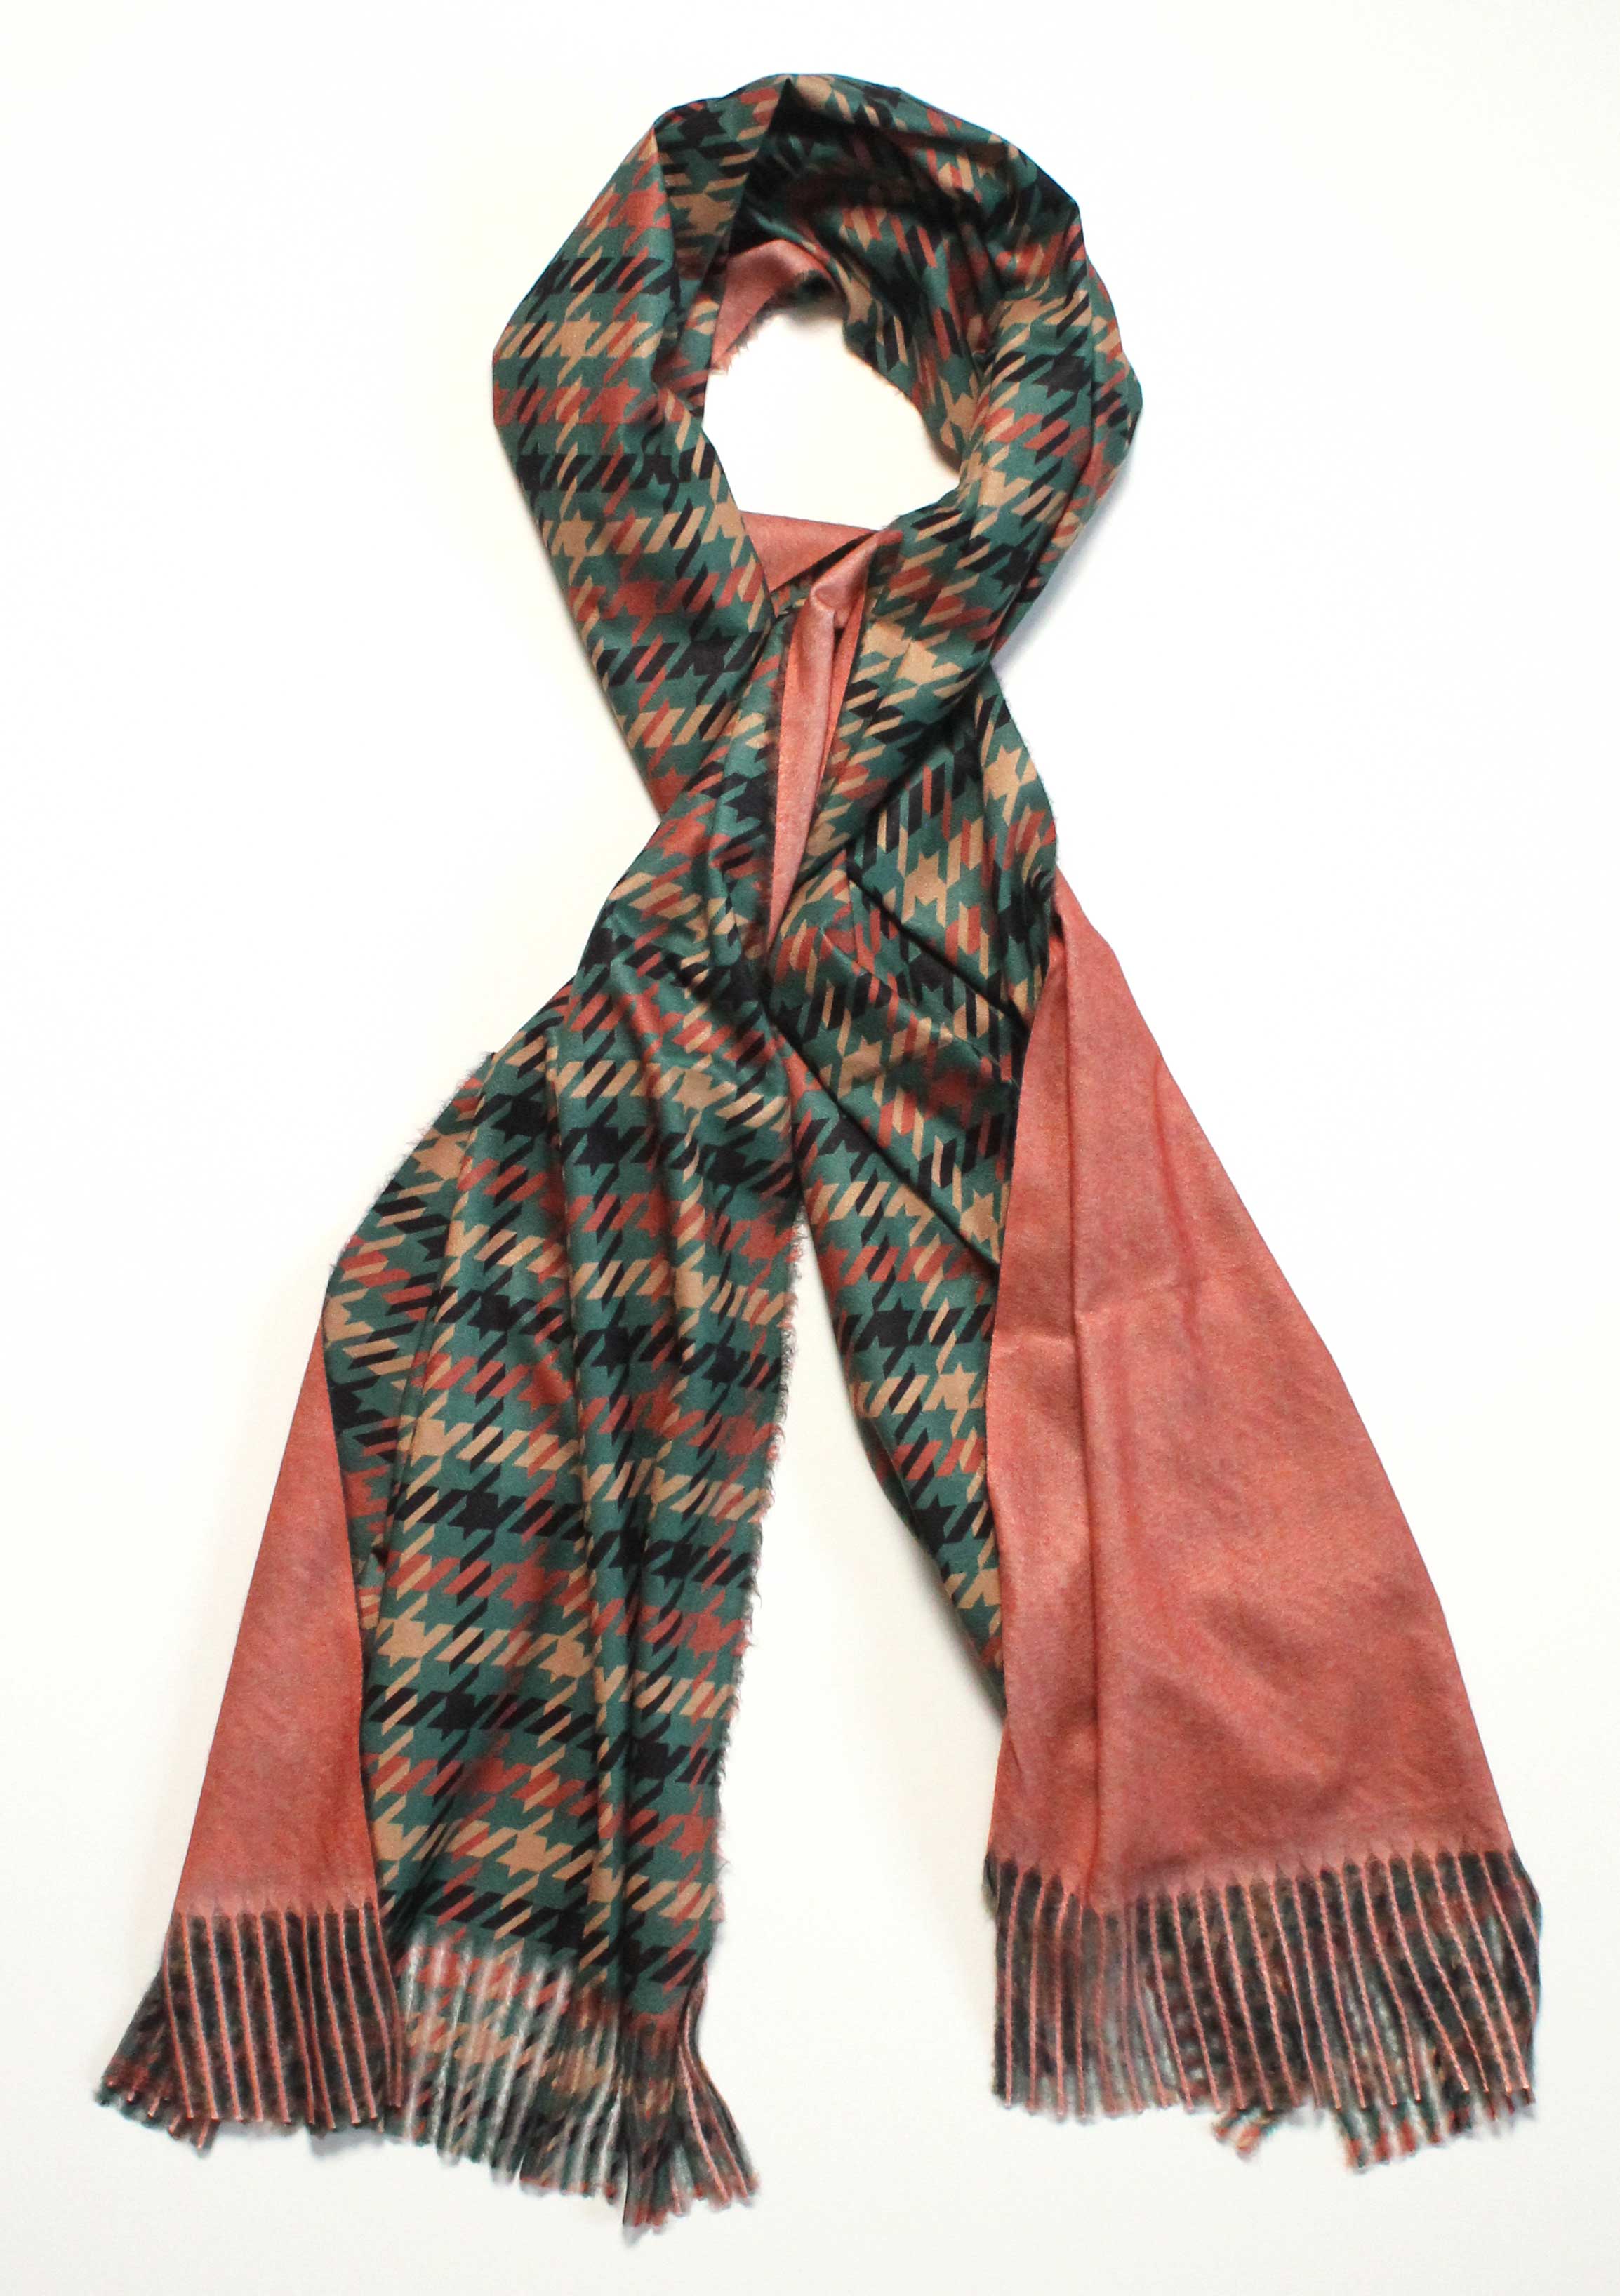 flannel shirt & alaska scarf - Mariannan